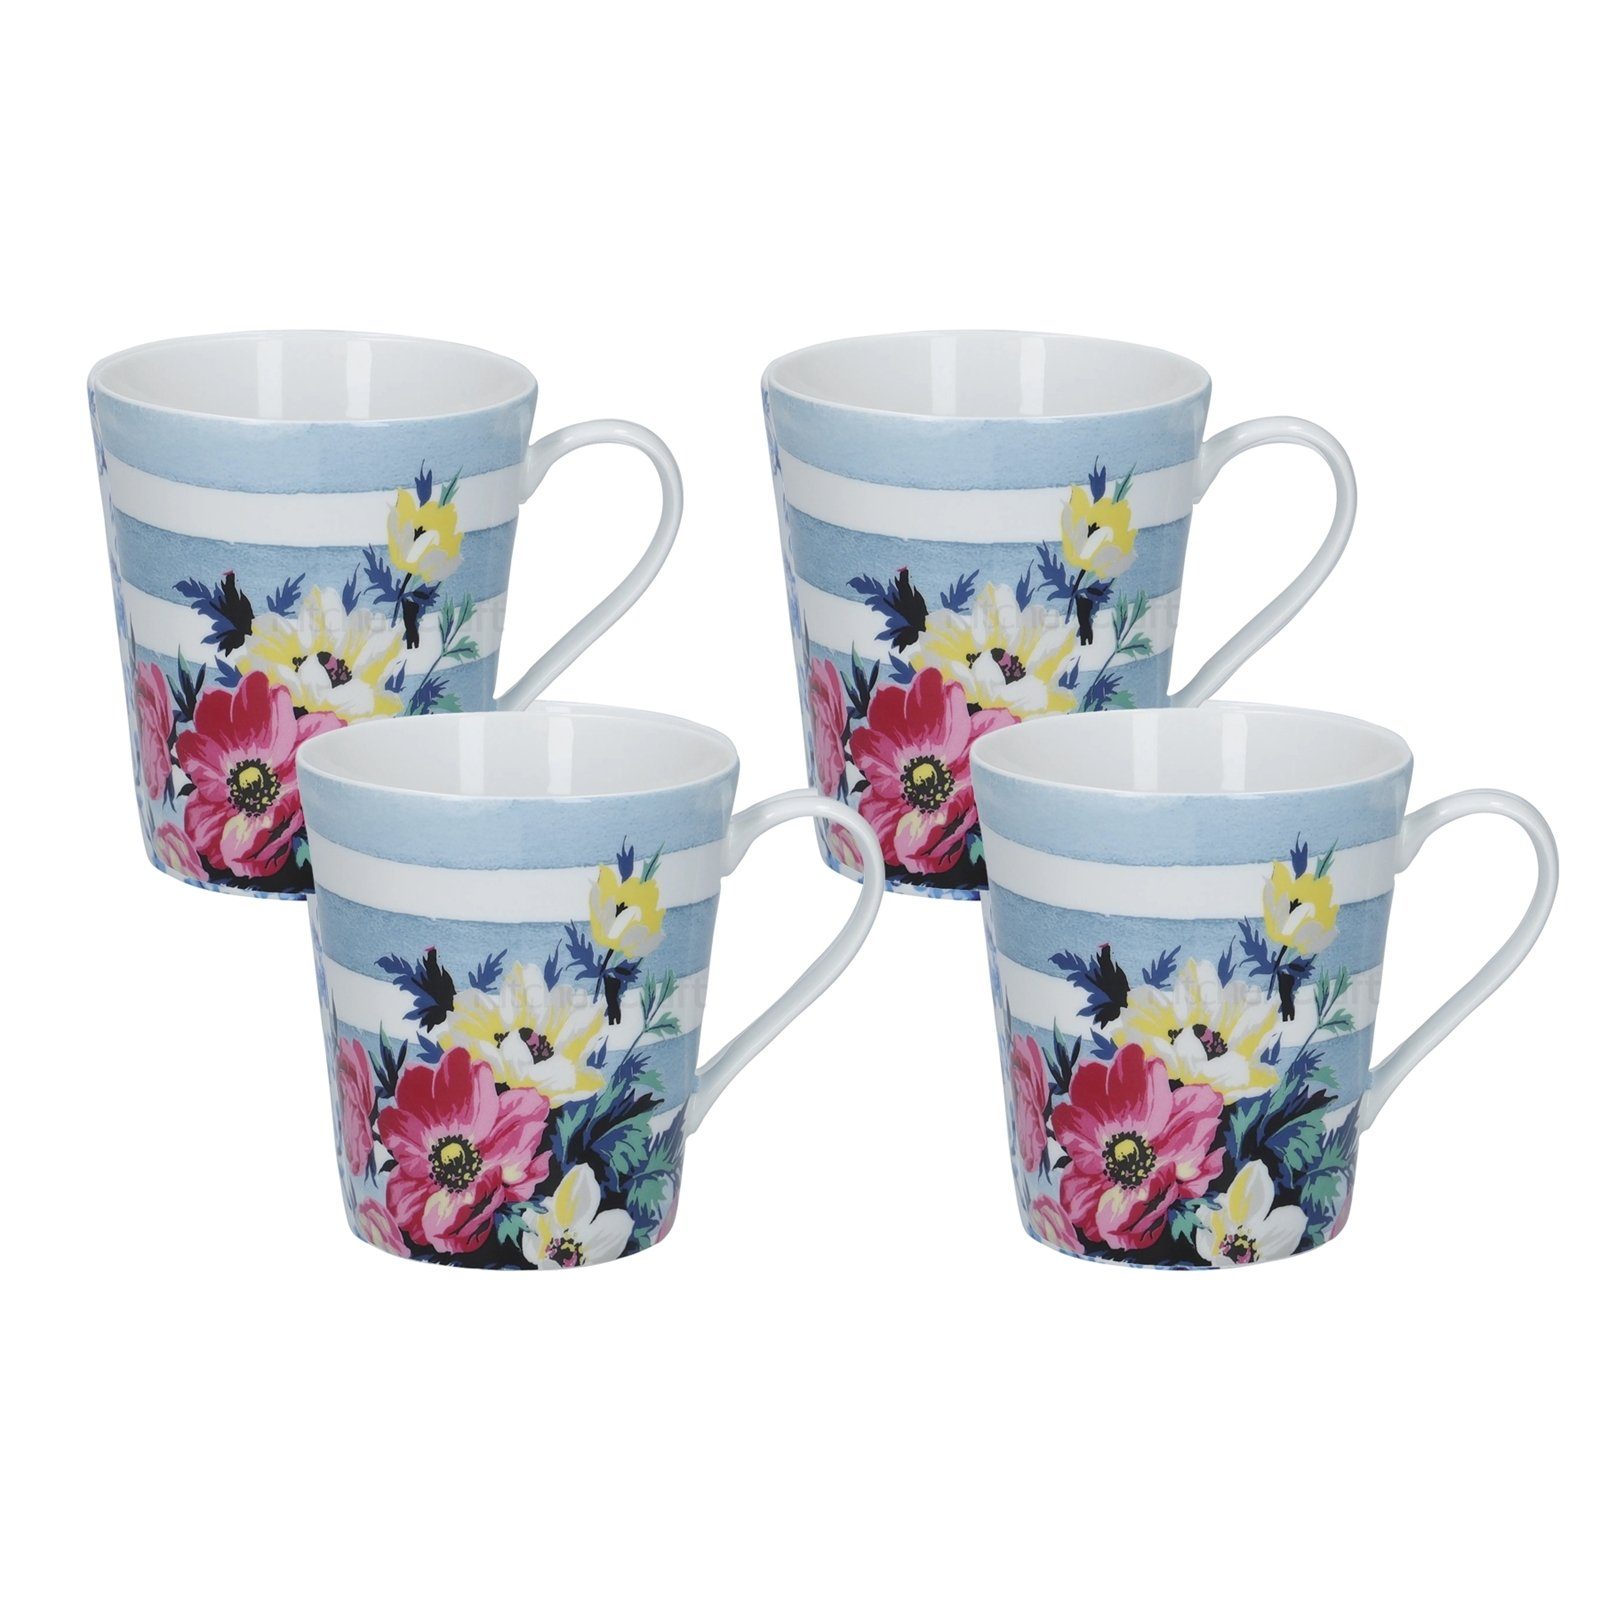 Neuetischkultur Tasse Kaffeetasse Porzellan Blumendekor 4er-Set Mikasa, Porzellan, Kaffeebecher Blume Bunt Stripe